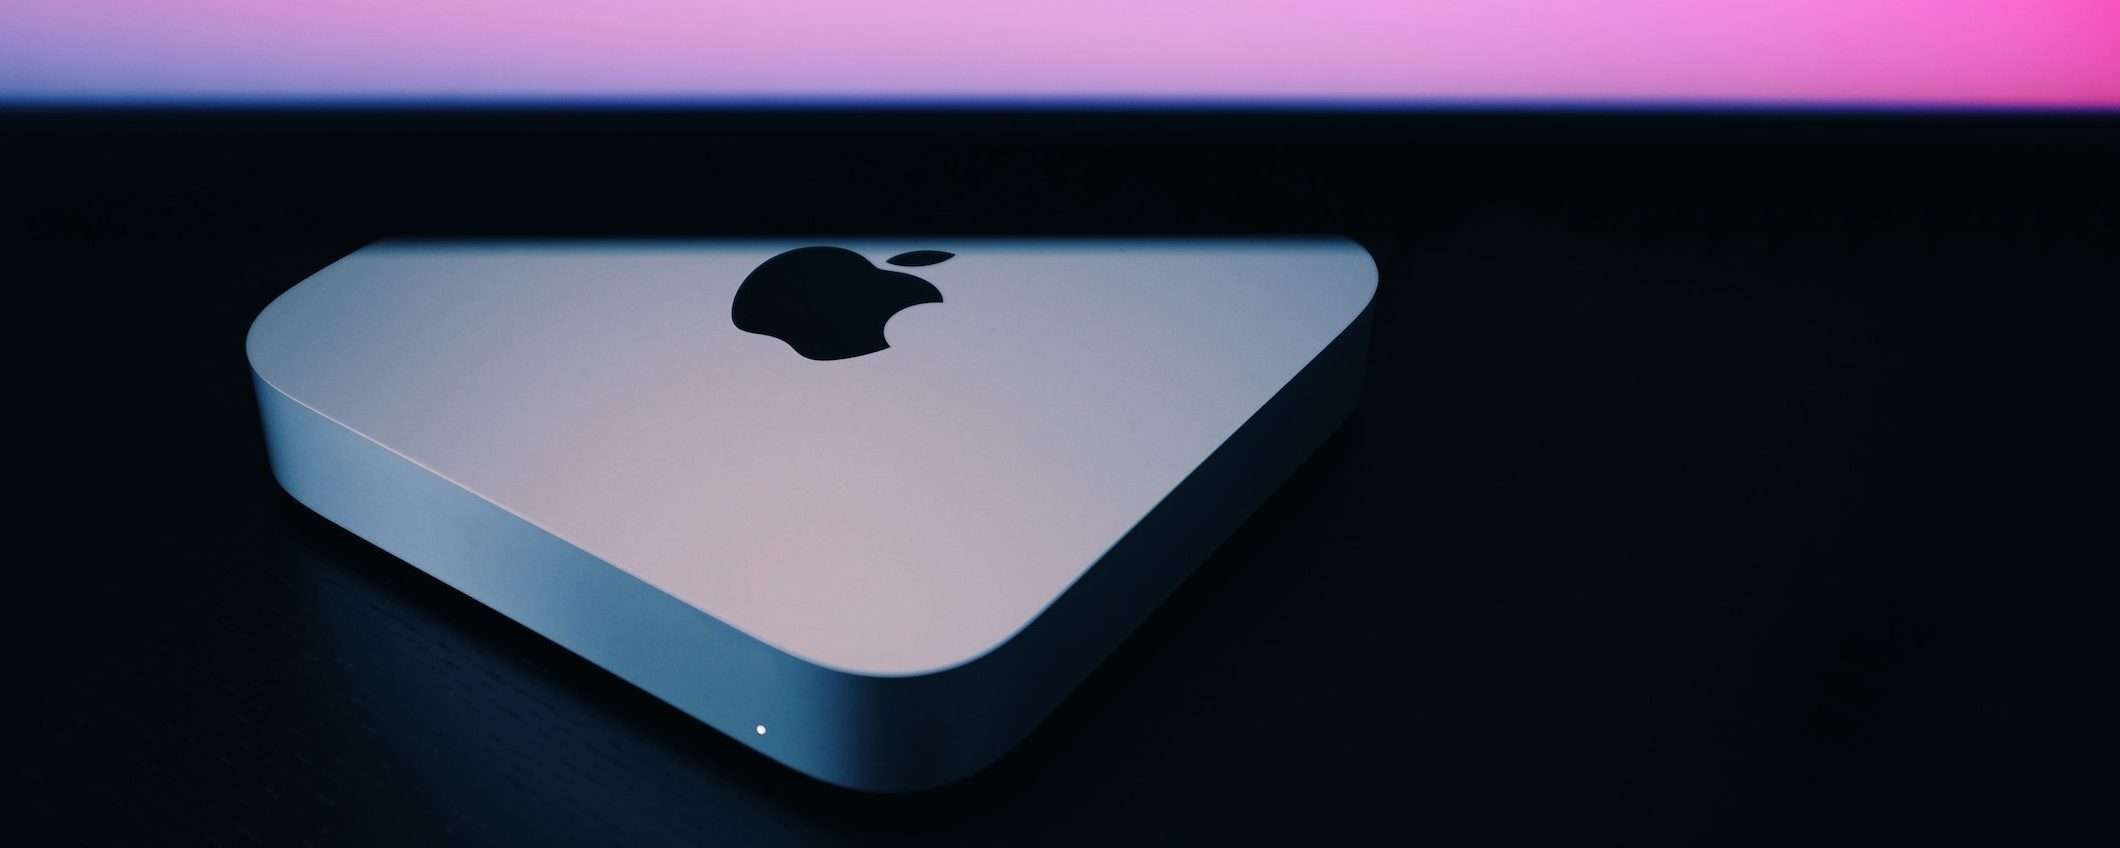 Apple: Mac mini, avvistati due nuovi modelli online